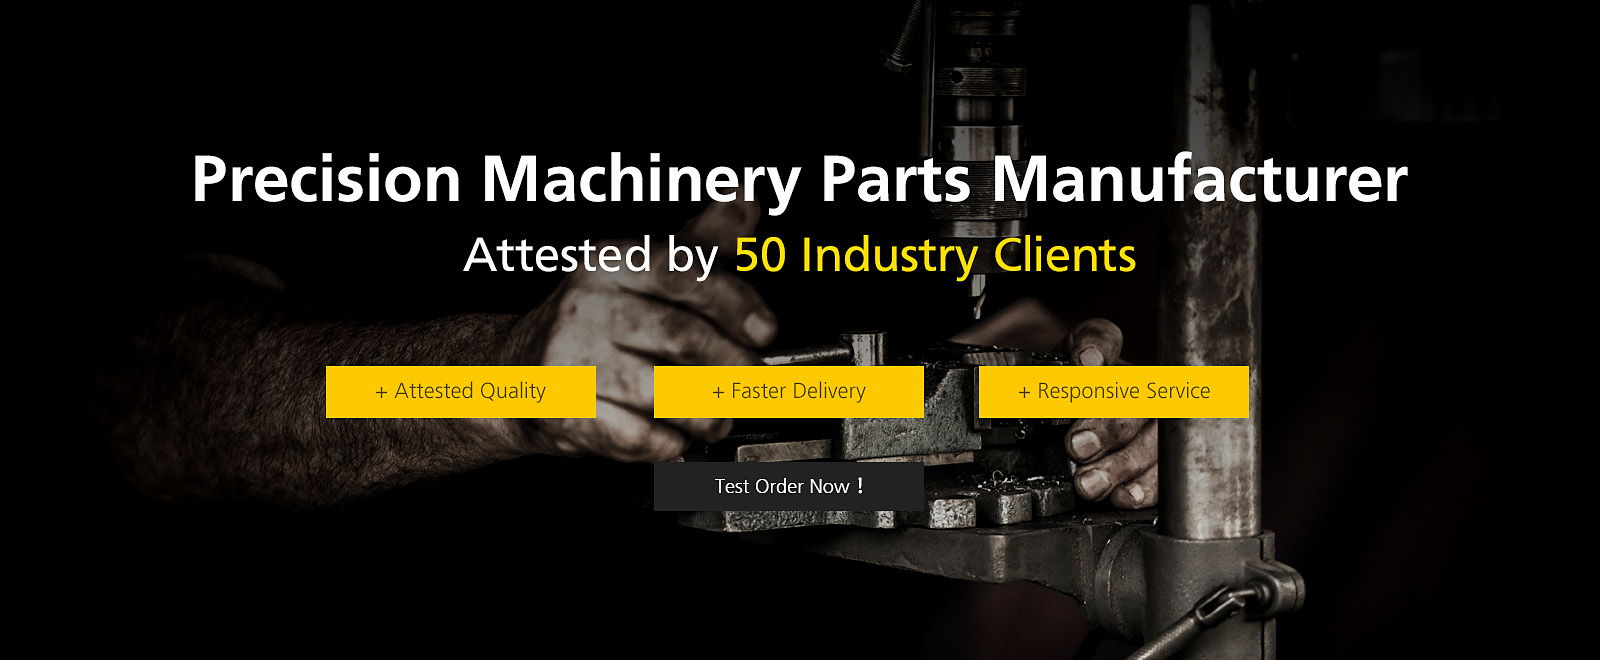 Precision Machinery Parts Manufacturer